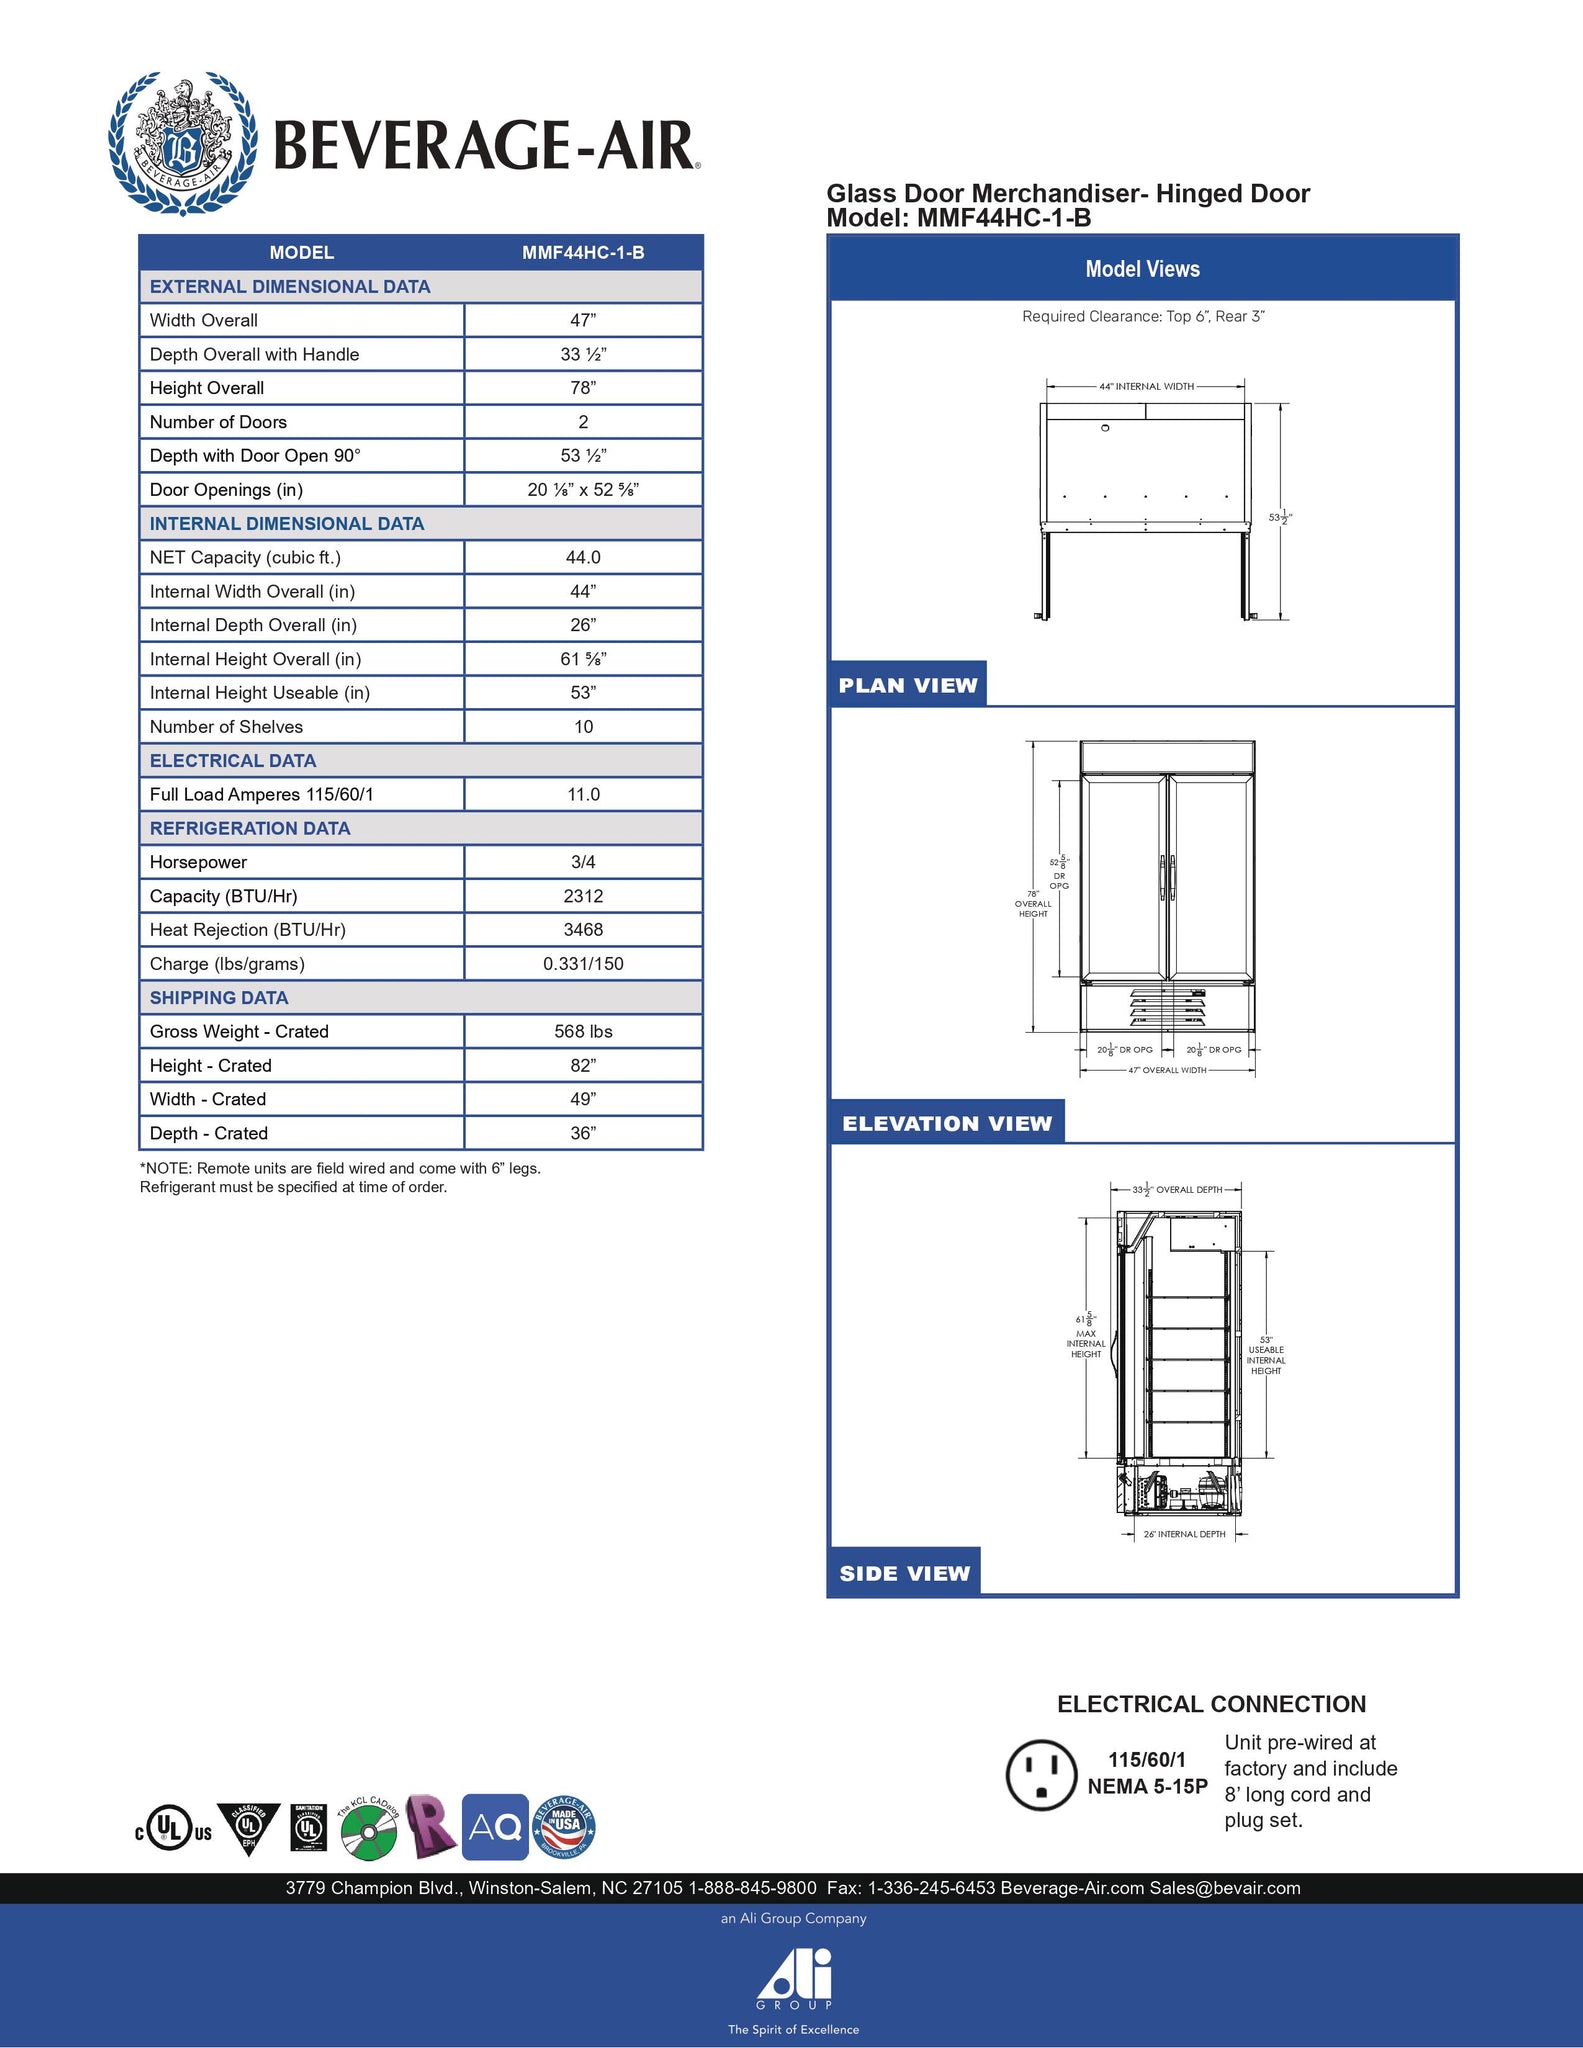 Beverage-Air MMF44HC-1-B 47" MarketMax Series Two Section Glass Door Merchandiser Freezer